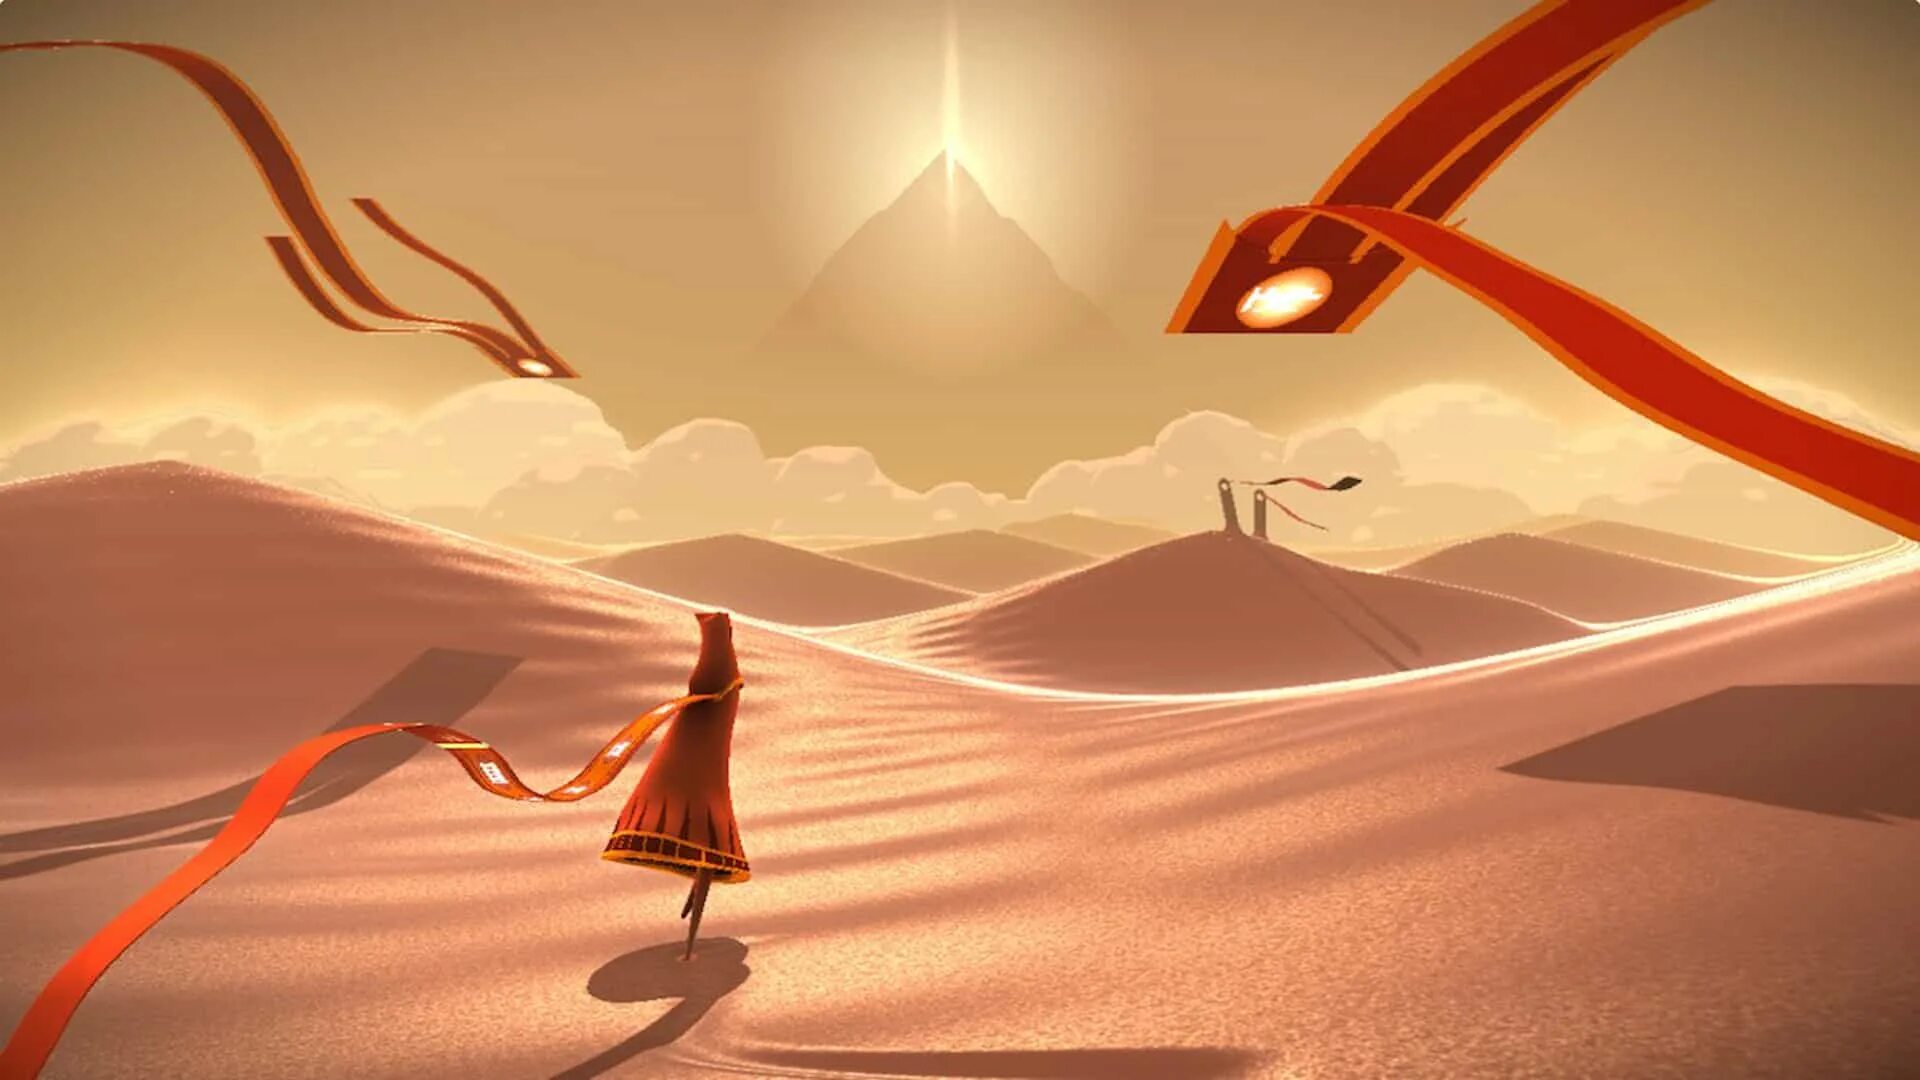 Tales journey. Journey игра thatgamecompany. Journey (игра, 2012). Джорни путешествие игра. Пустыня из игры Джорни.